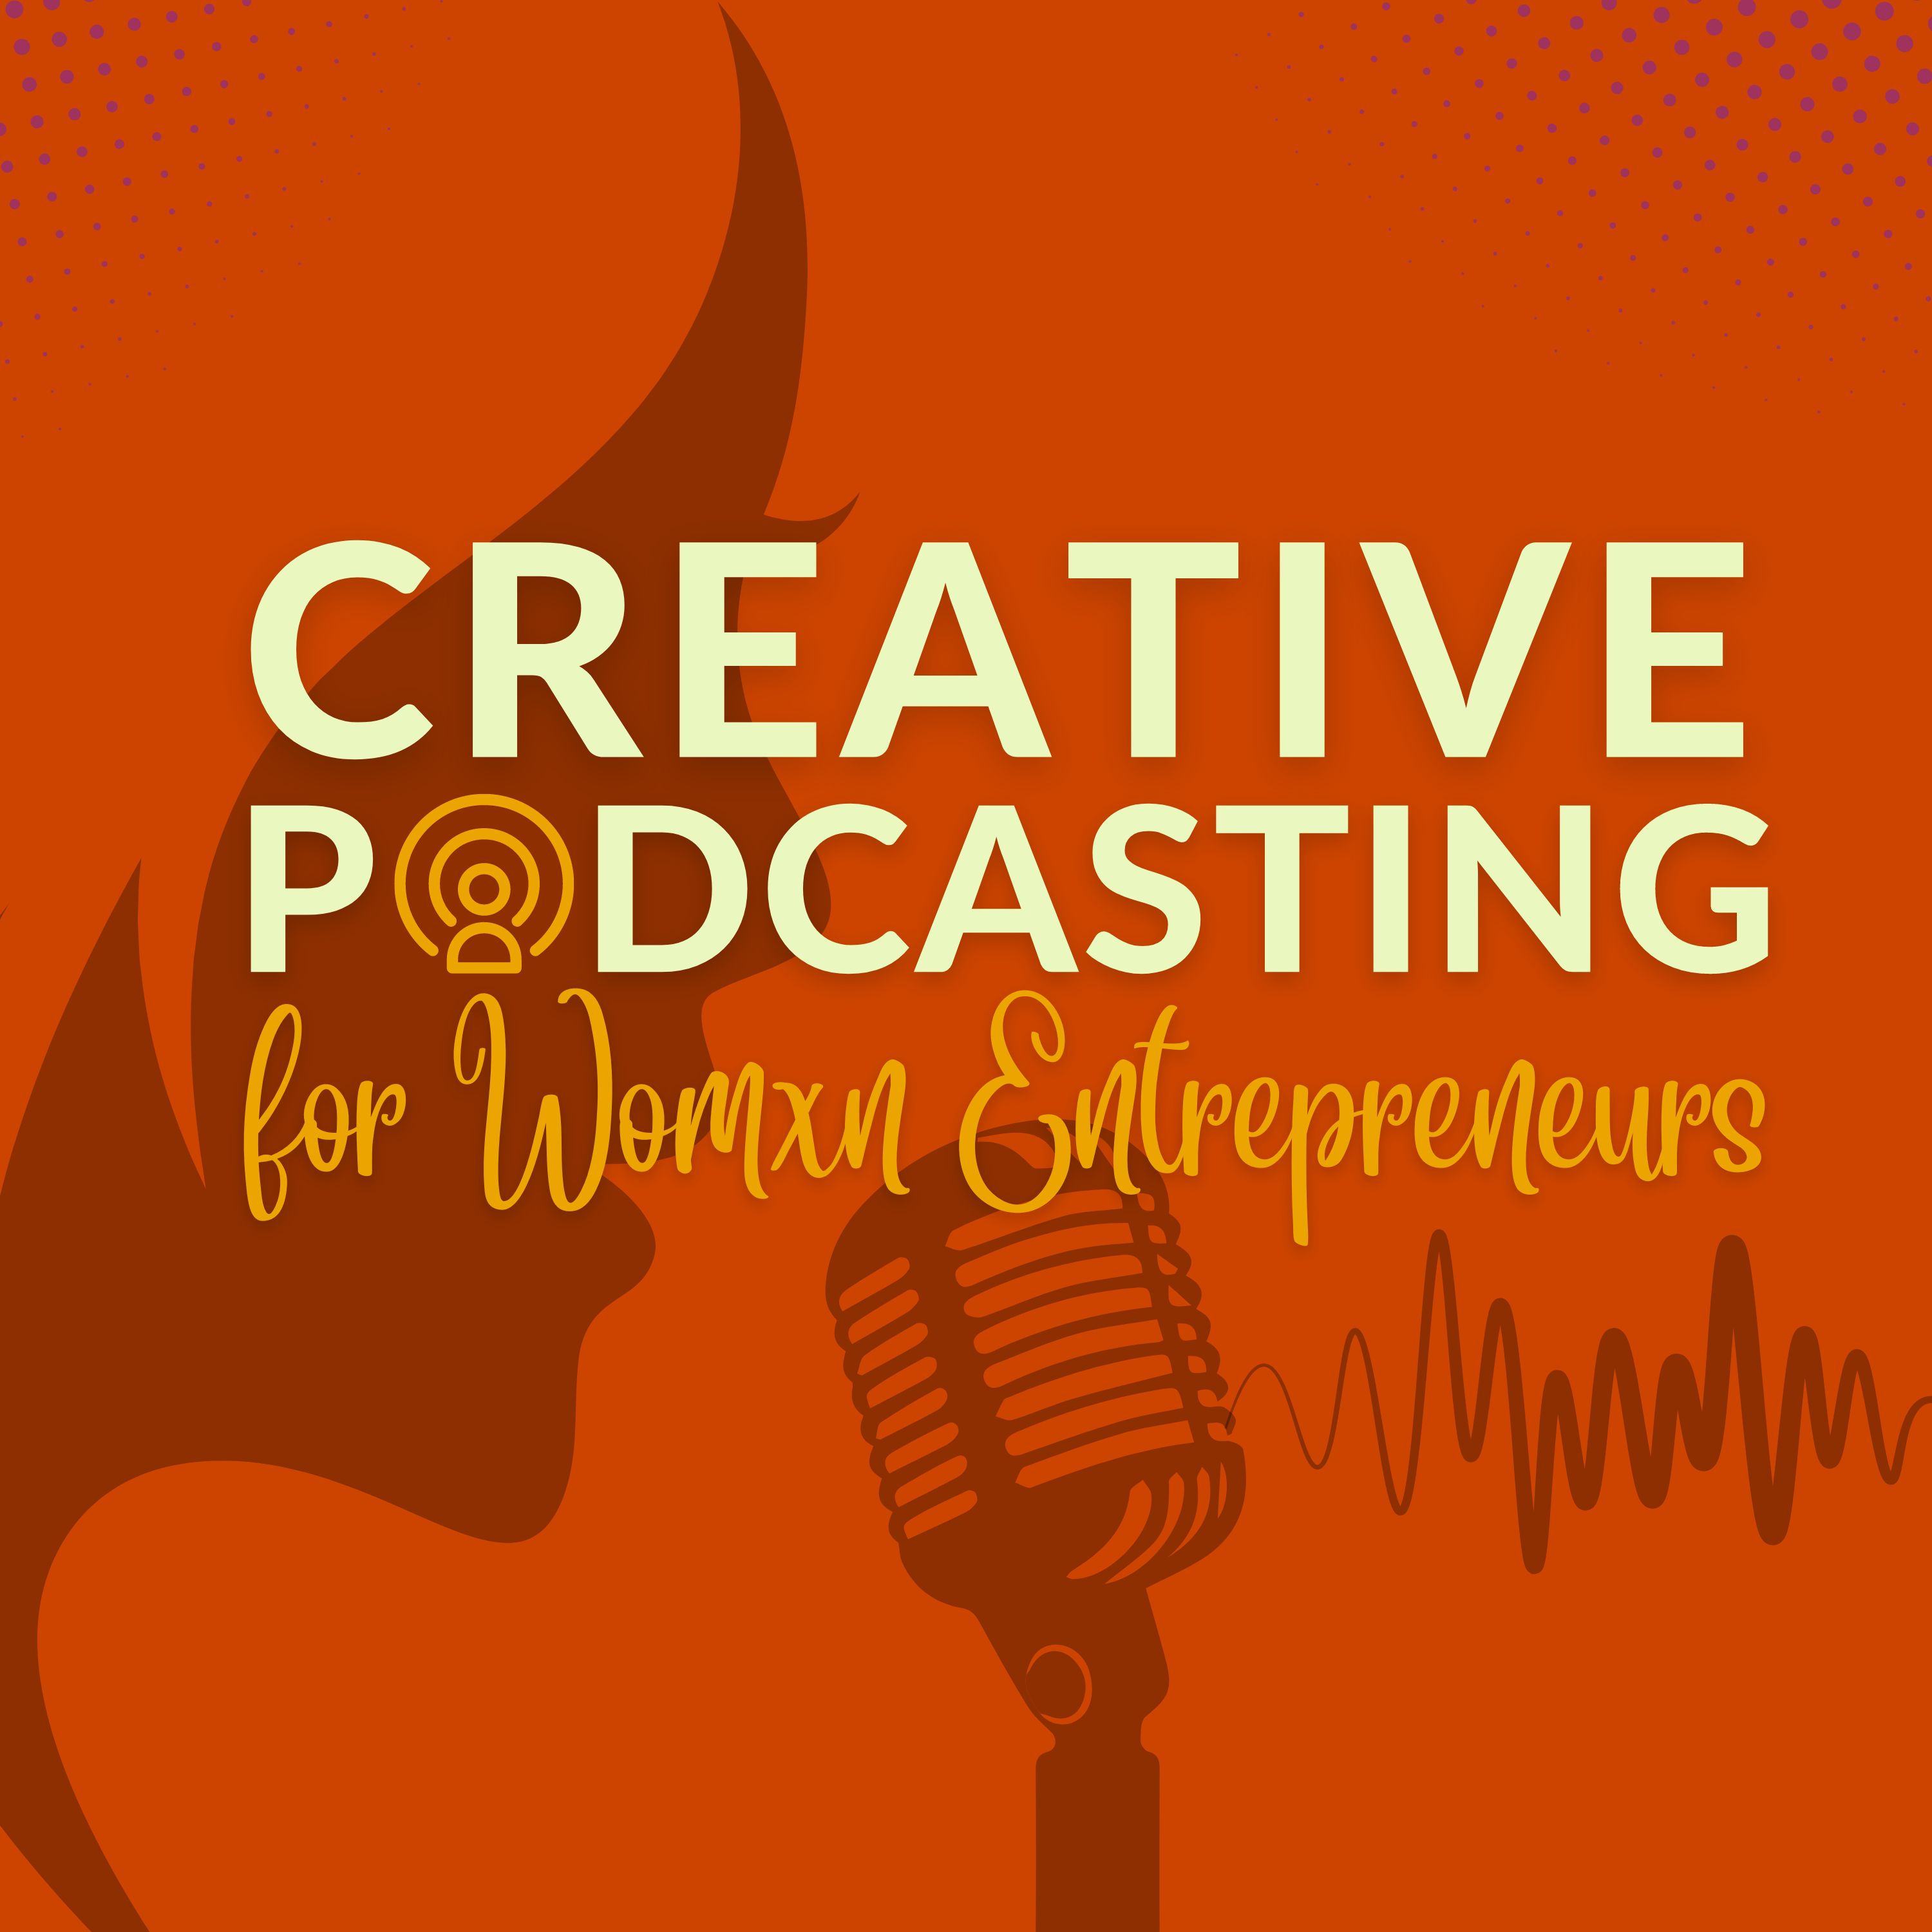 Artwork for podcast Creative Podcasting